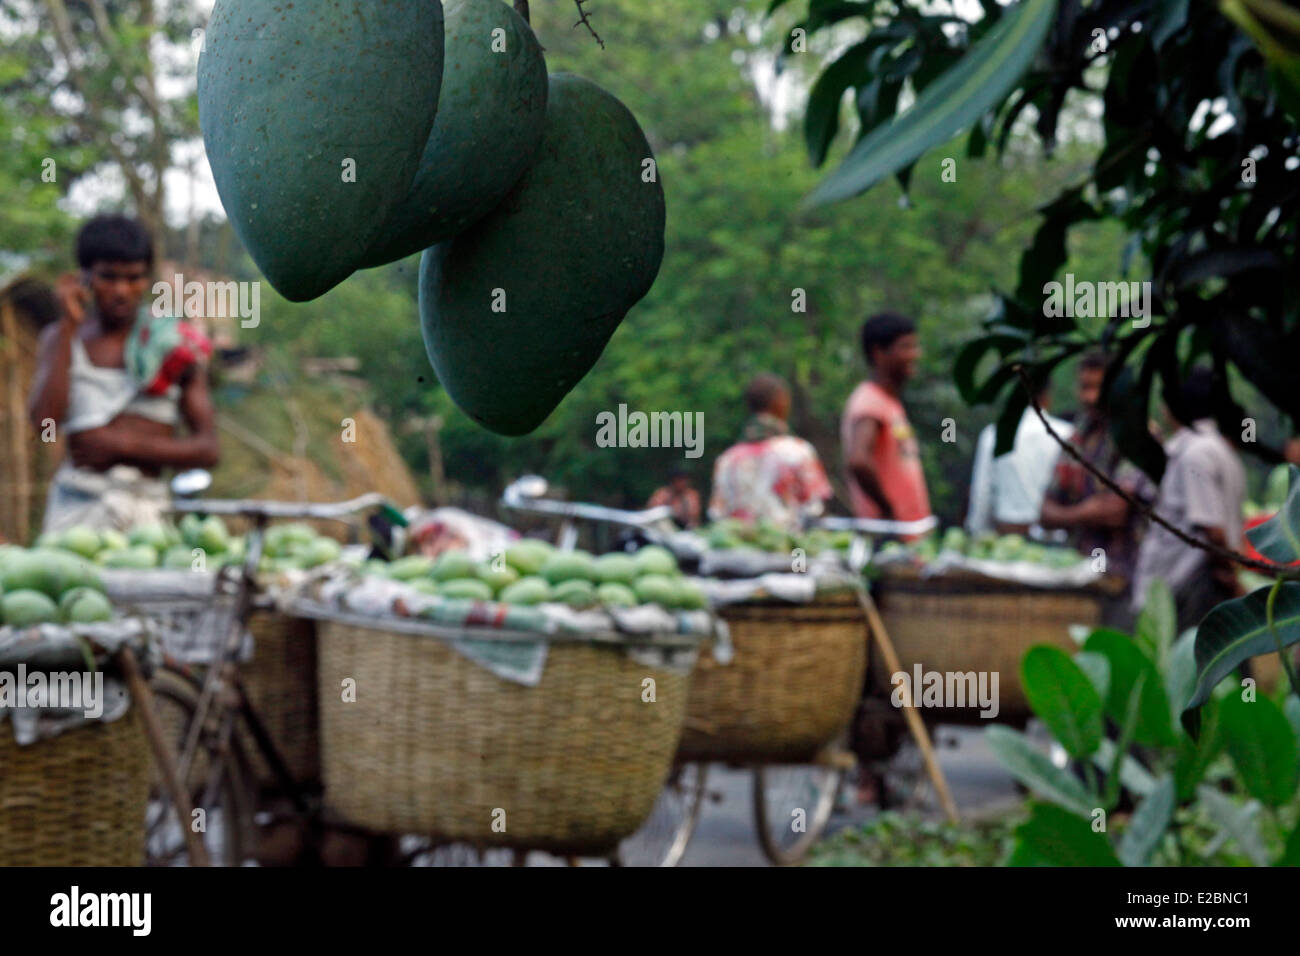 Chapainawabganj, Bangladesh, 17th June, 2014. Mango market Bangladesh generally produces about 800,000 metric tons of mangoes on 51,000 hectors of land. Chapainawabganj alone produces almost 200,000 tons of mangoes on 23,282 hectares of land. Credit:  zakir hossain chowdhury zakir/Alamy Live News Stock Photo